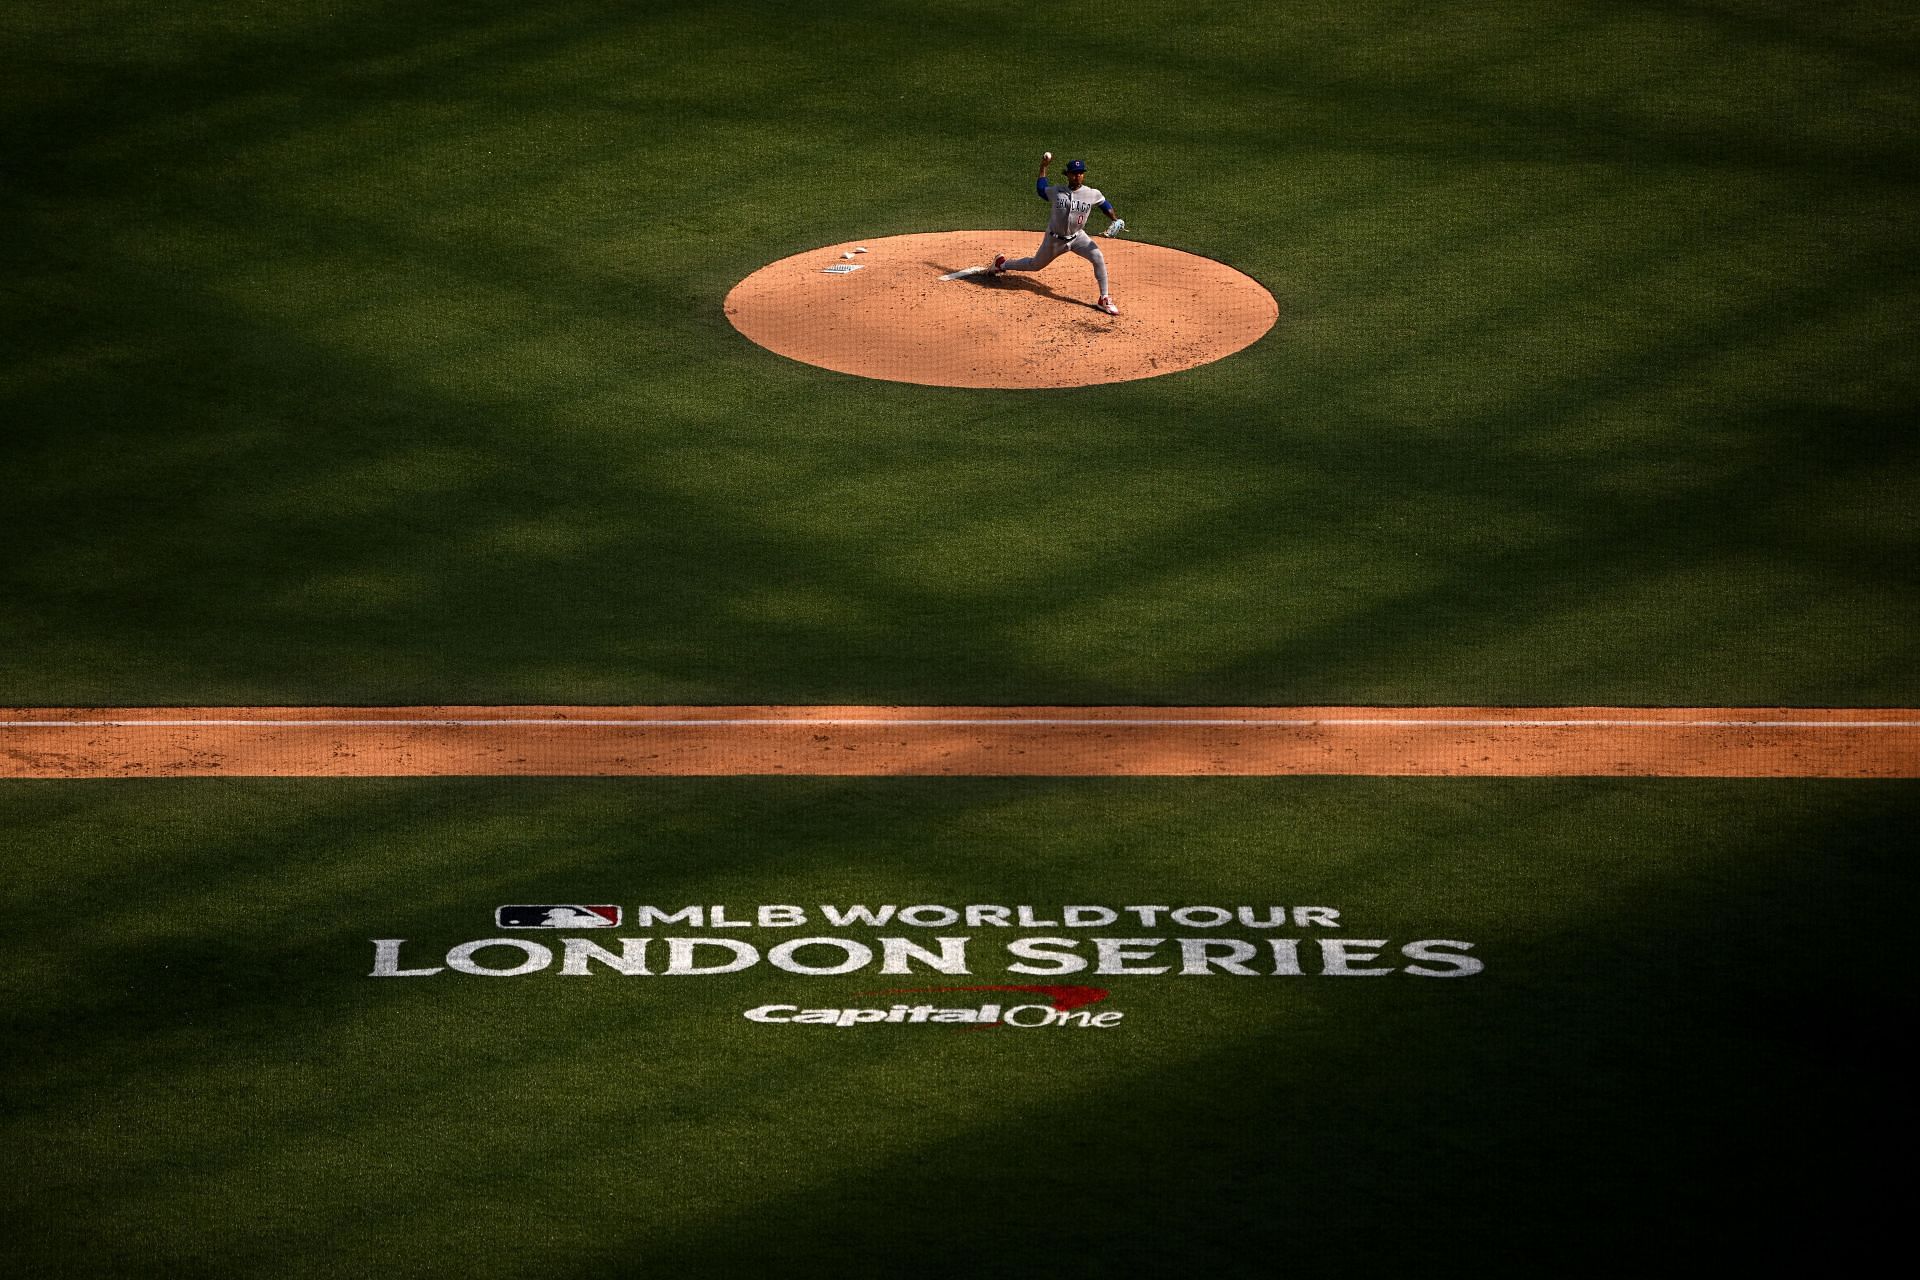 MLB visited London